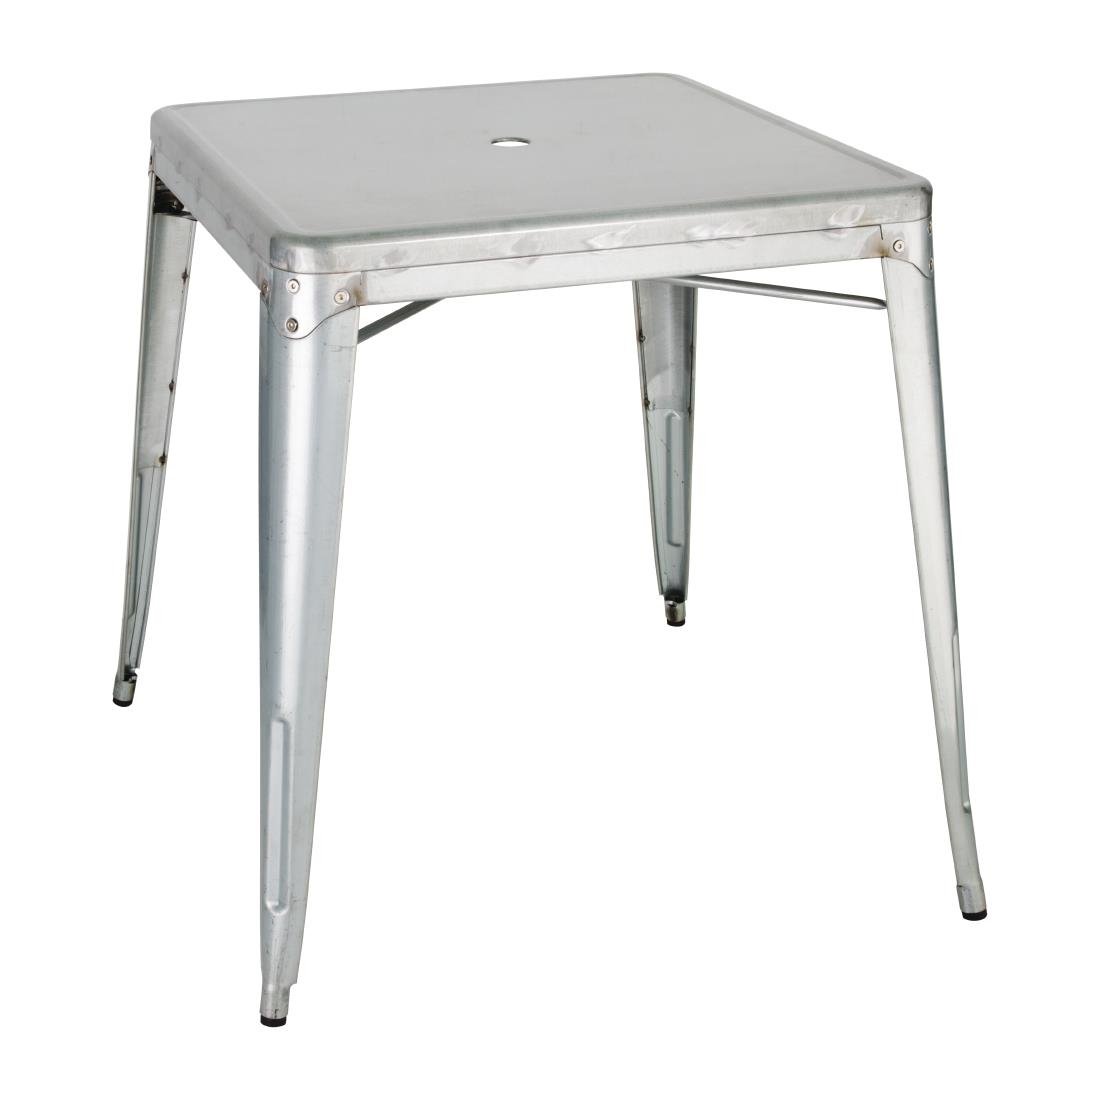 Bolero Bistro Galvanised Steel Square Table 668mm (Single) JD Catering Equipment Solutions Ltd